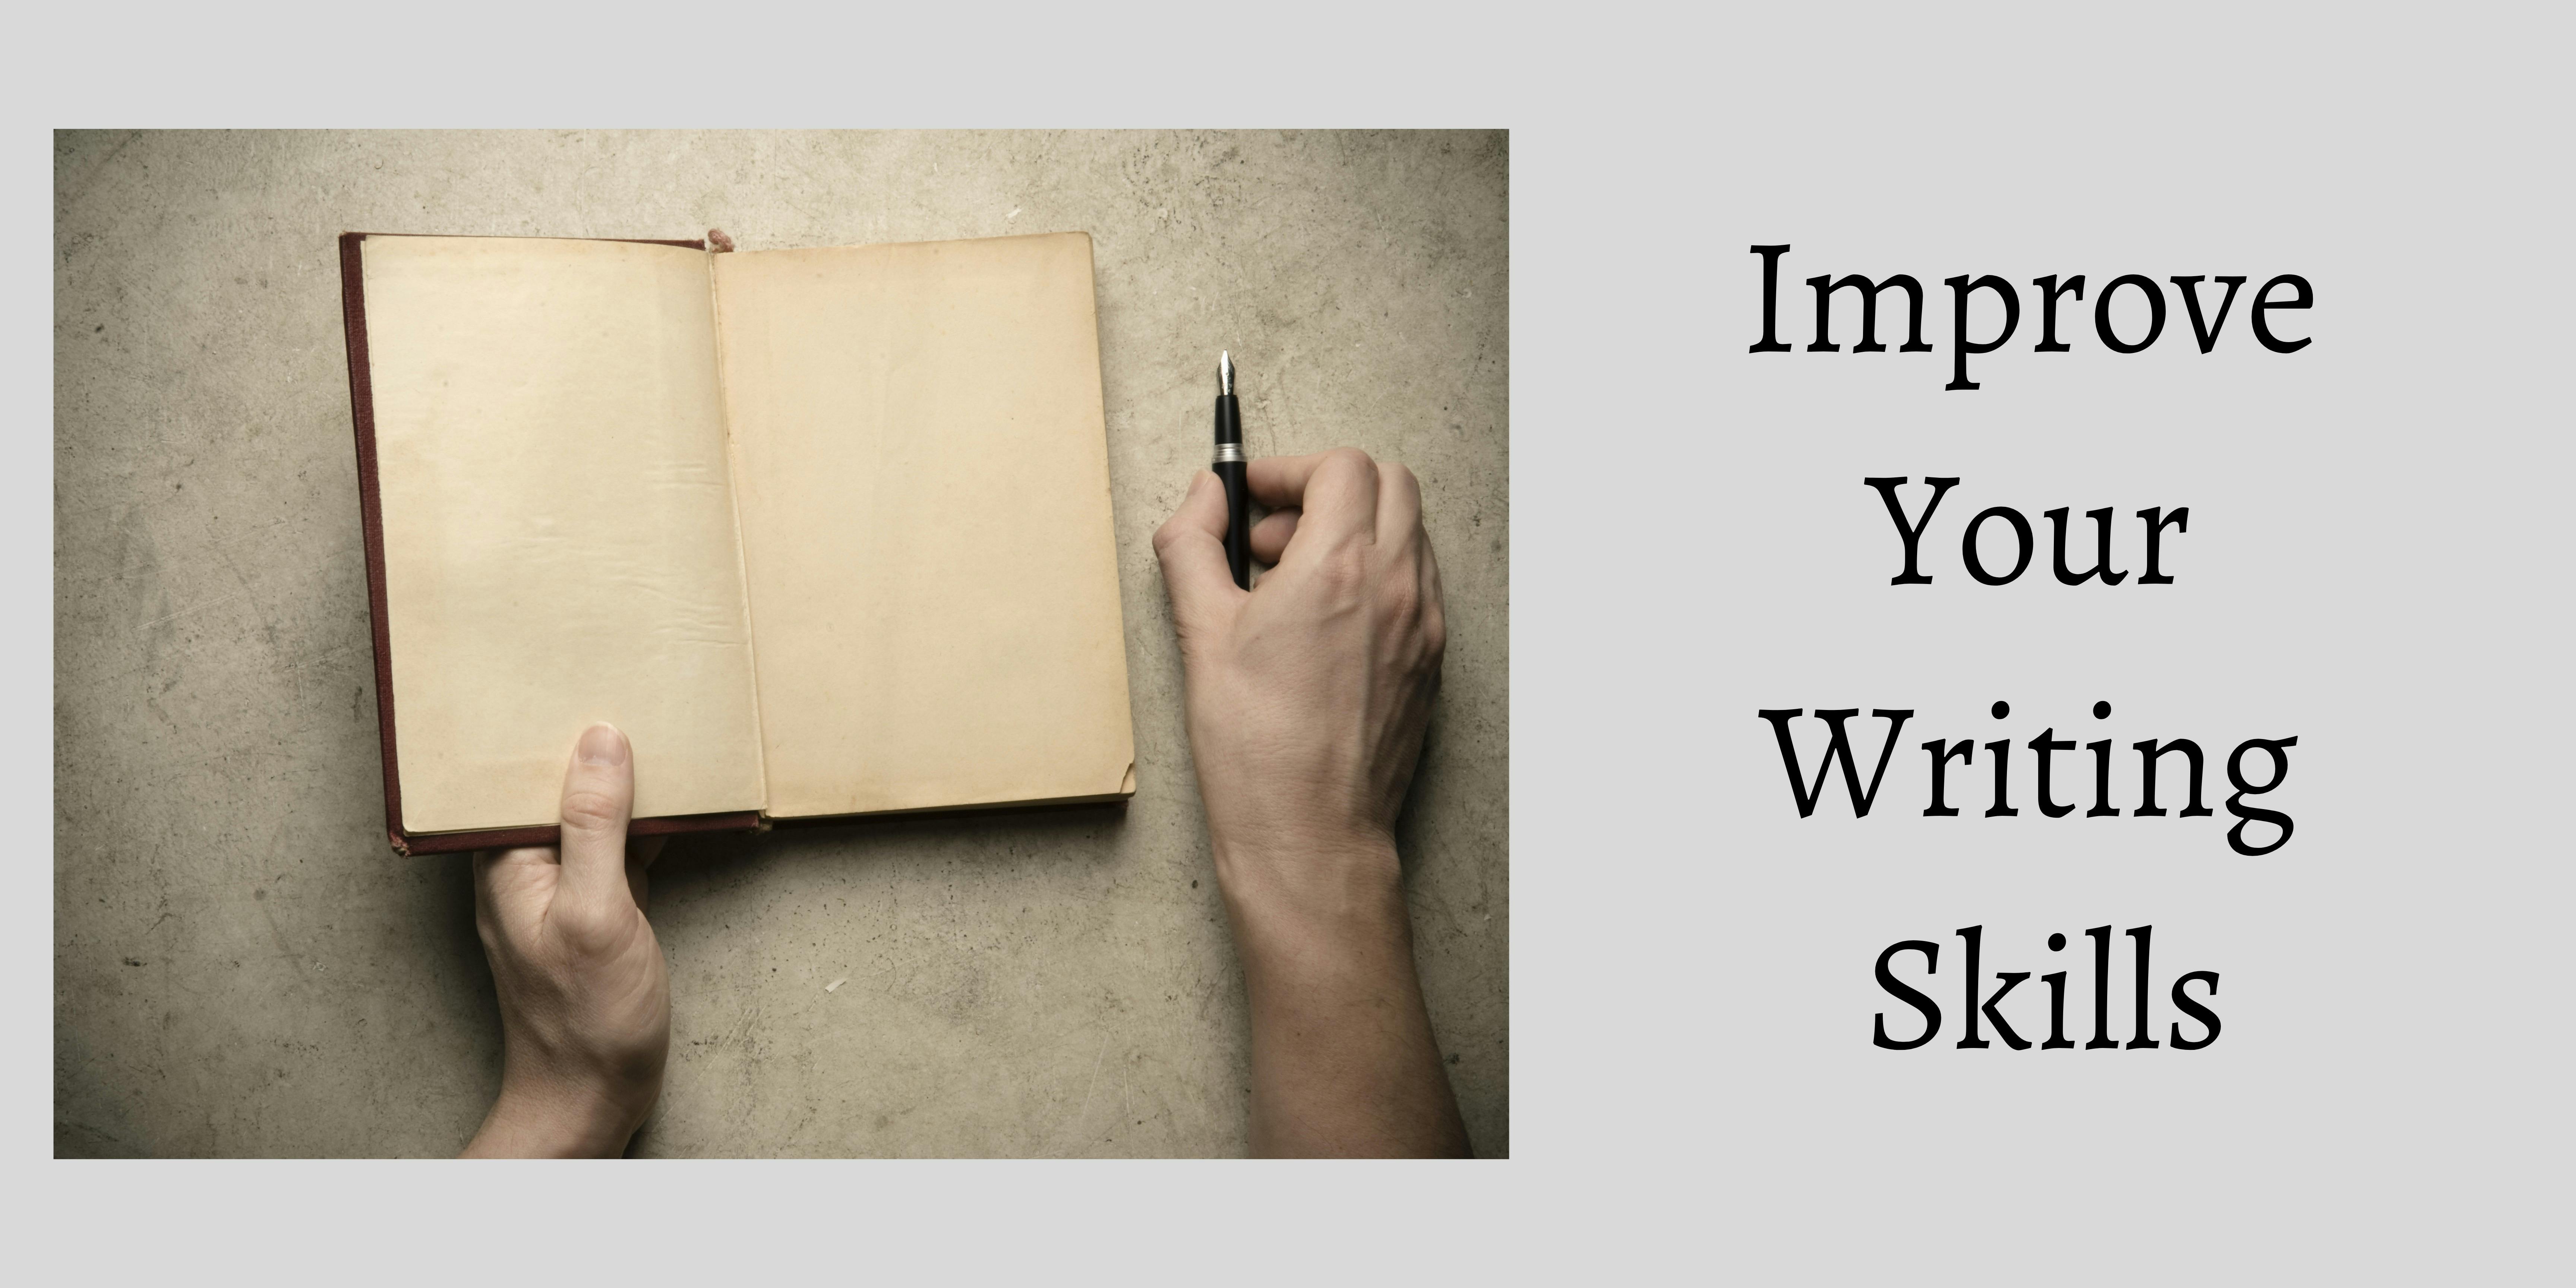 Improve Your Writing Skills.jpg